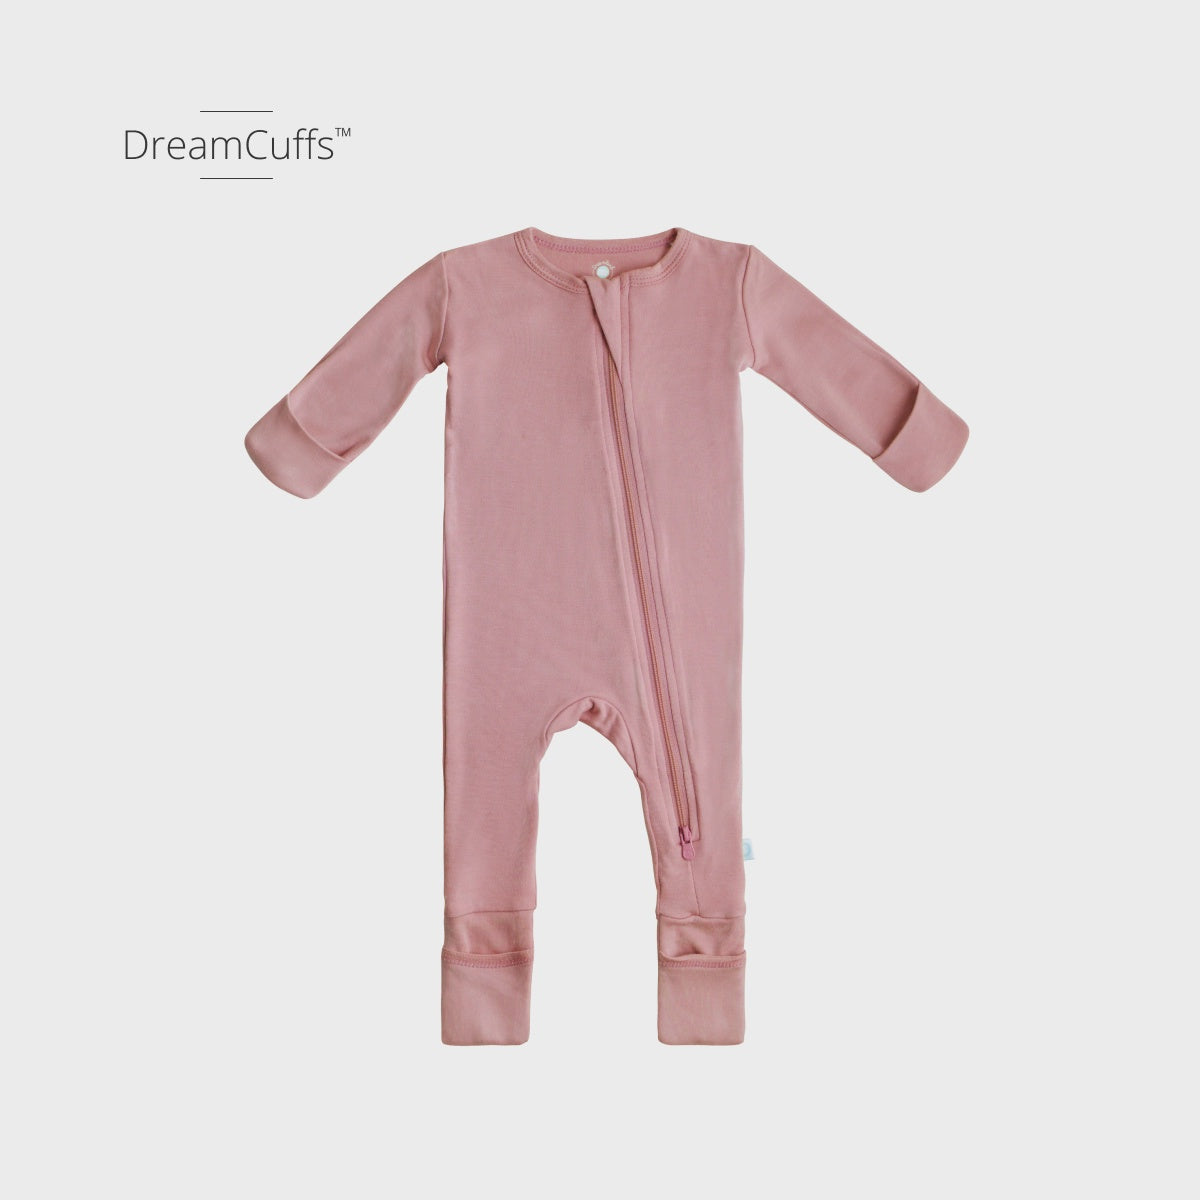 Dreamland Baby Bamboo Pajamas w/Dreamcuffs - Dusty Rose